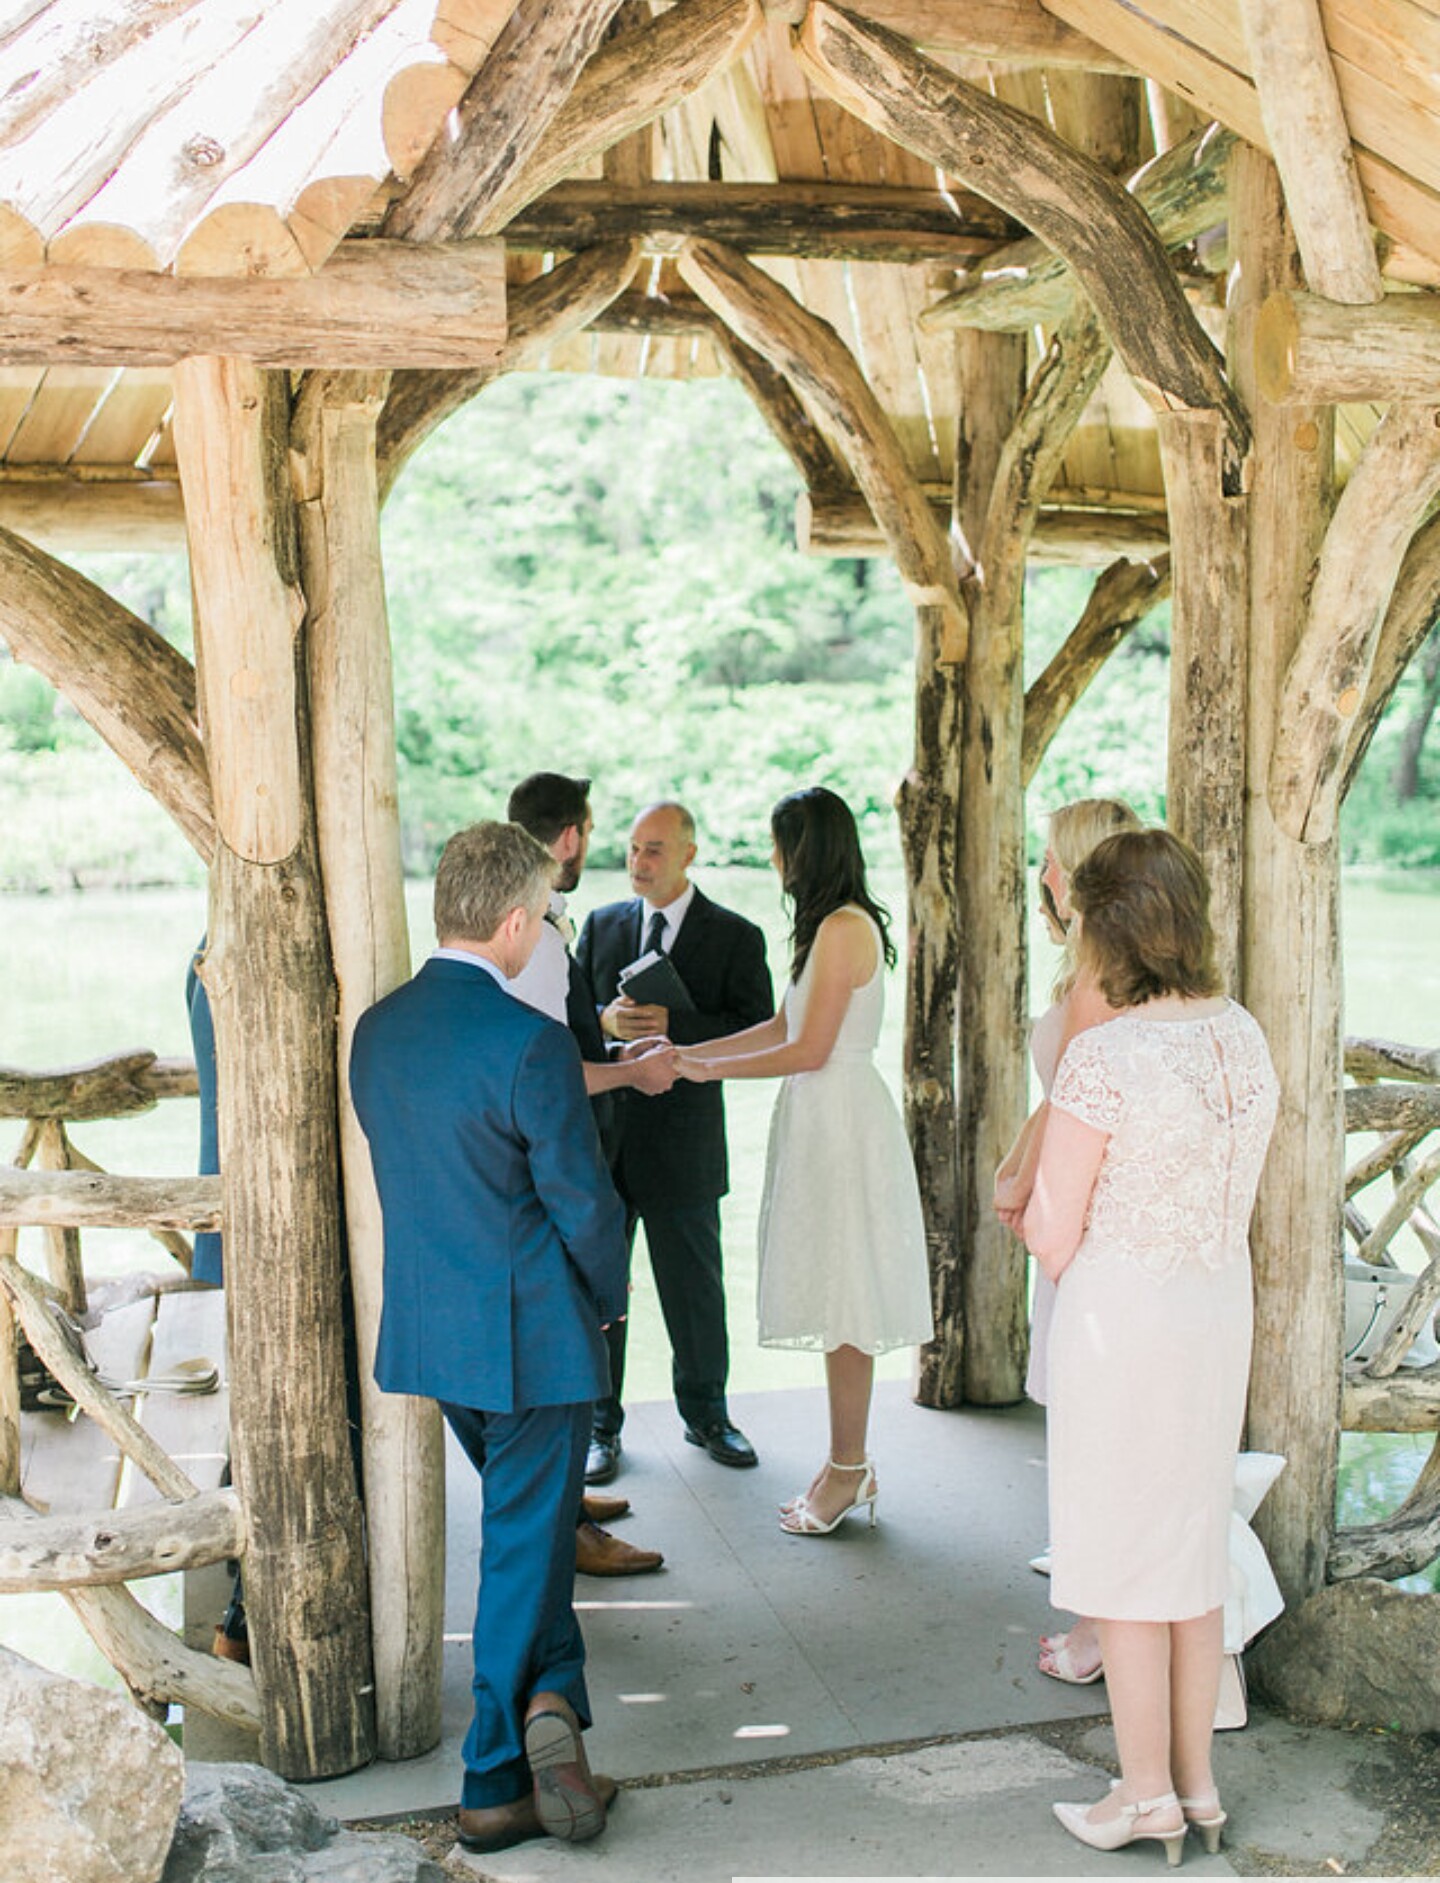 Wedding vows in central park